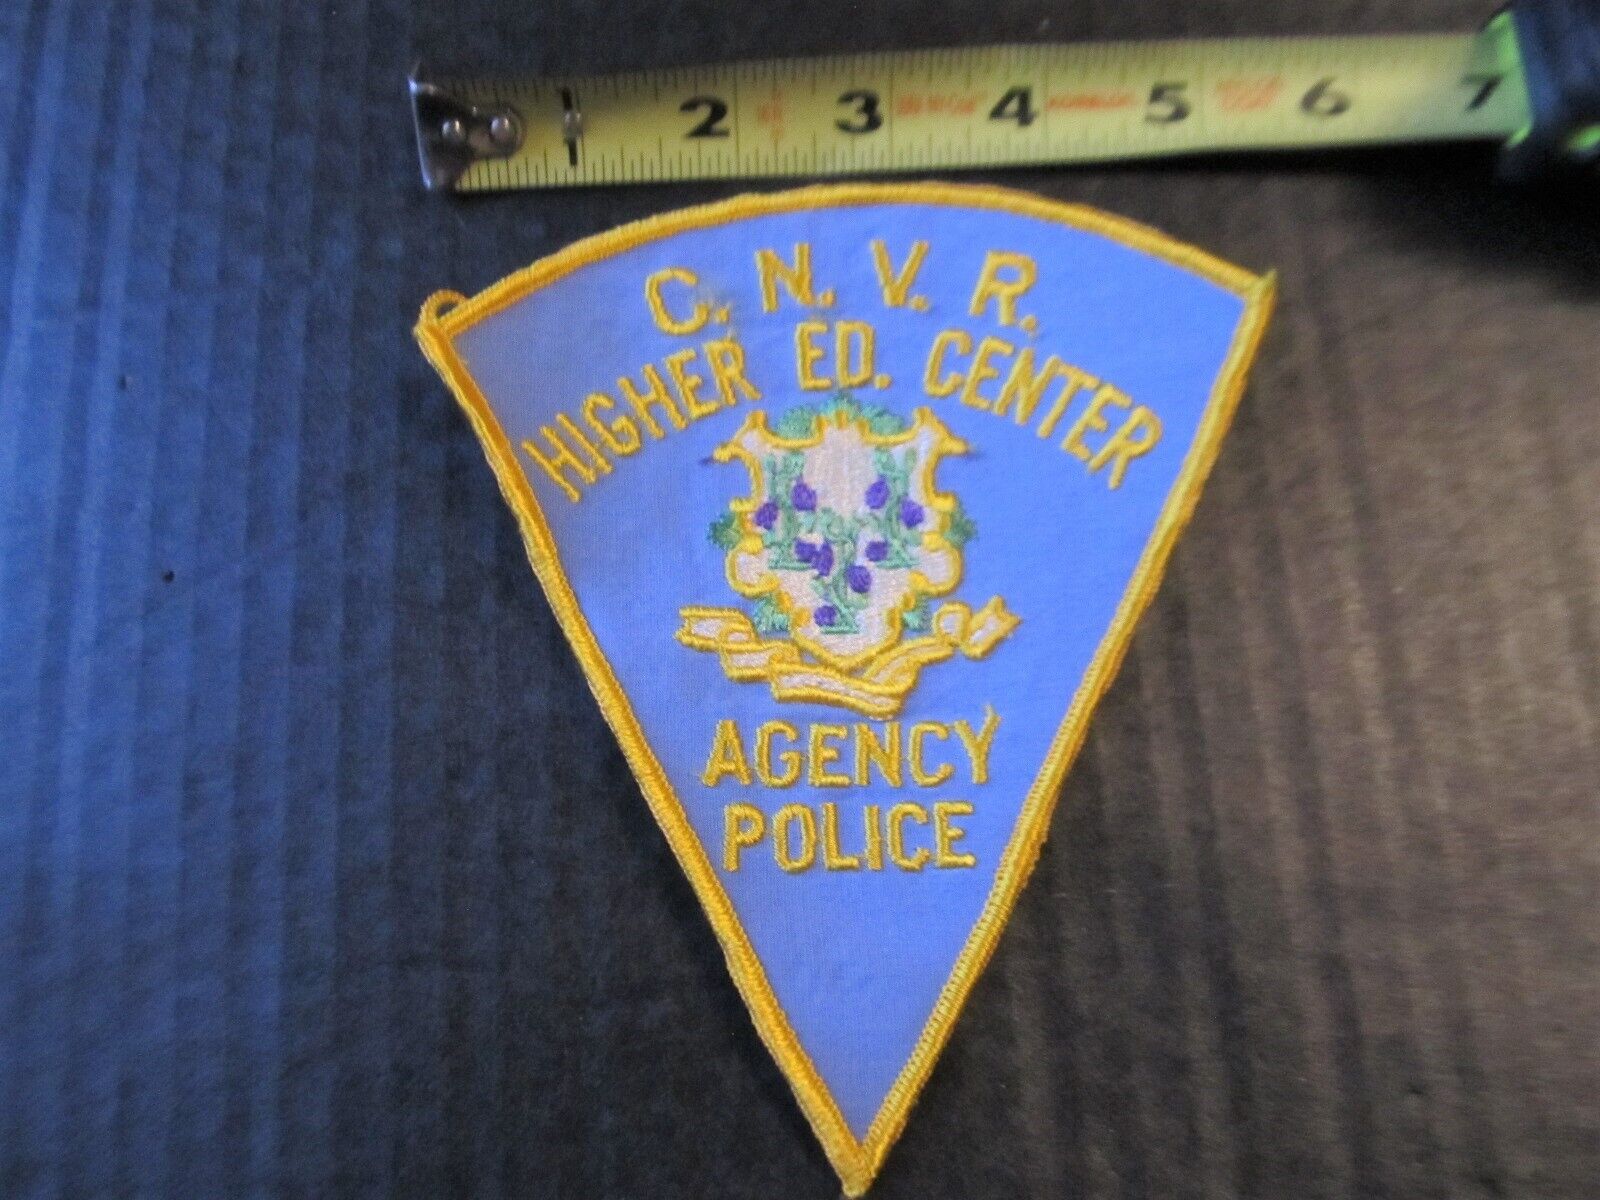 Vintage CNVR Higher Ed Center Agency Police Patch Obsolete 